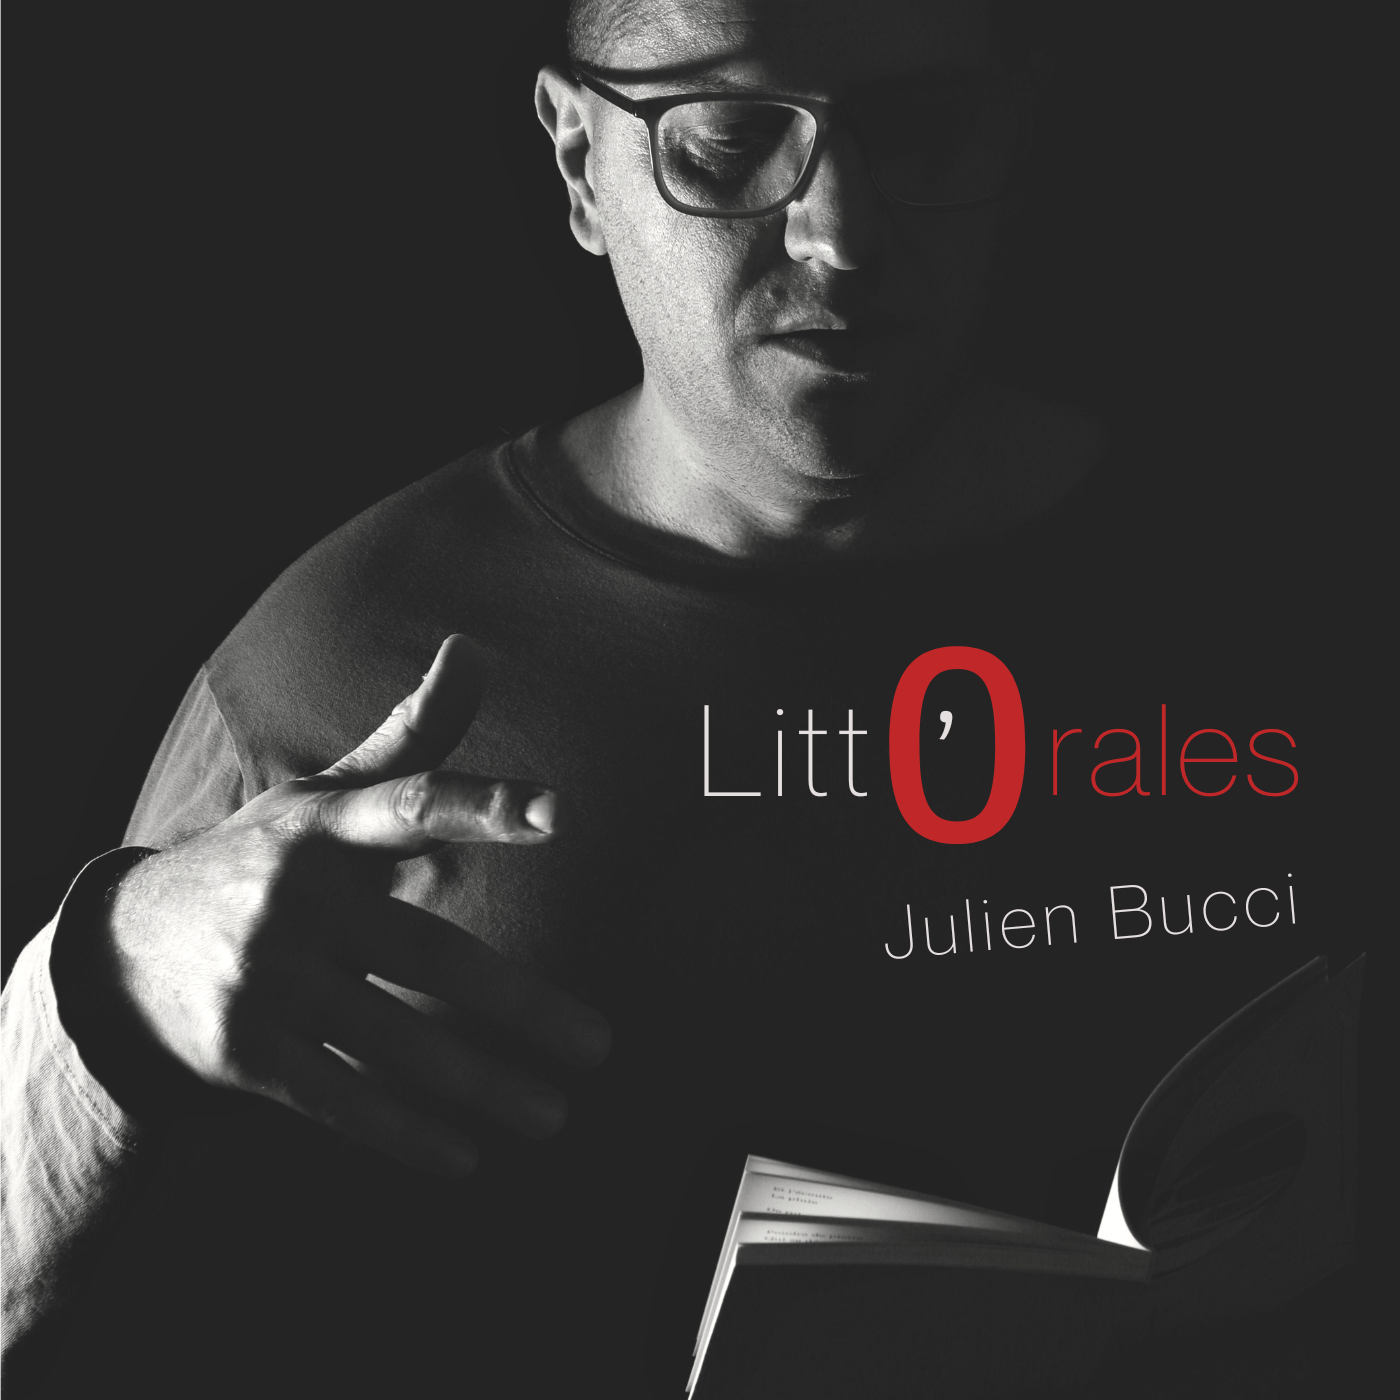 Litt’orales Julien Bucci - Bibliothérapie